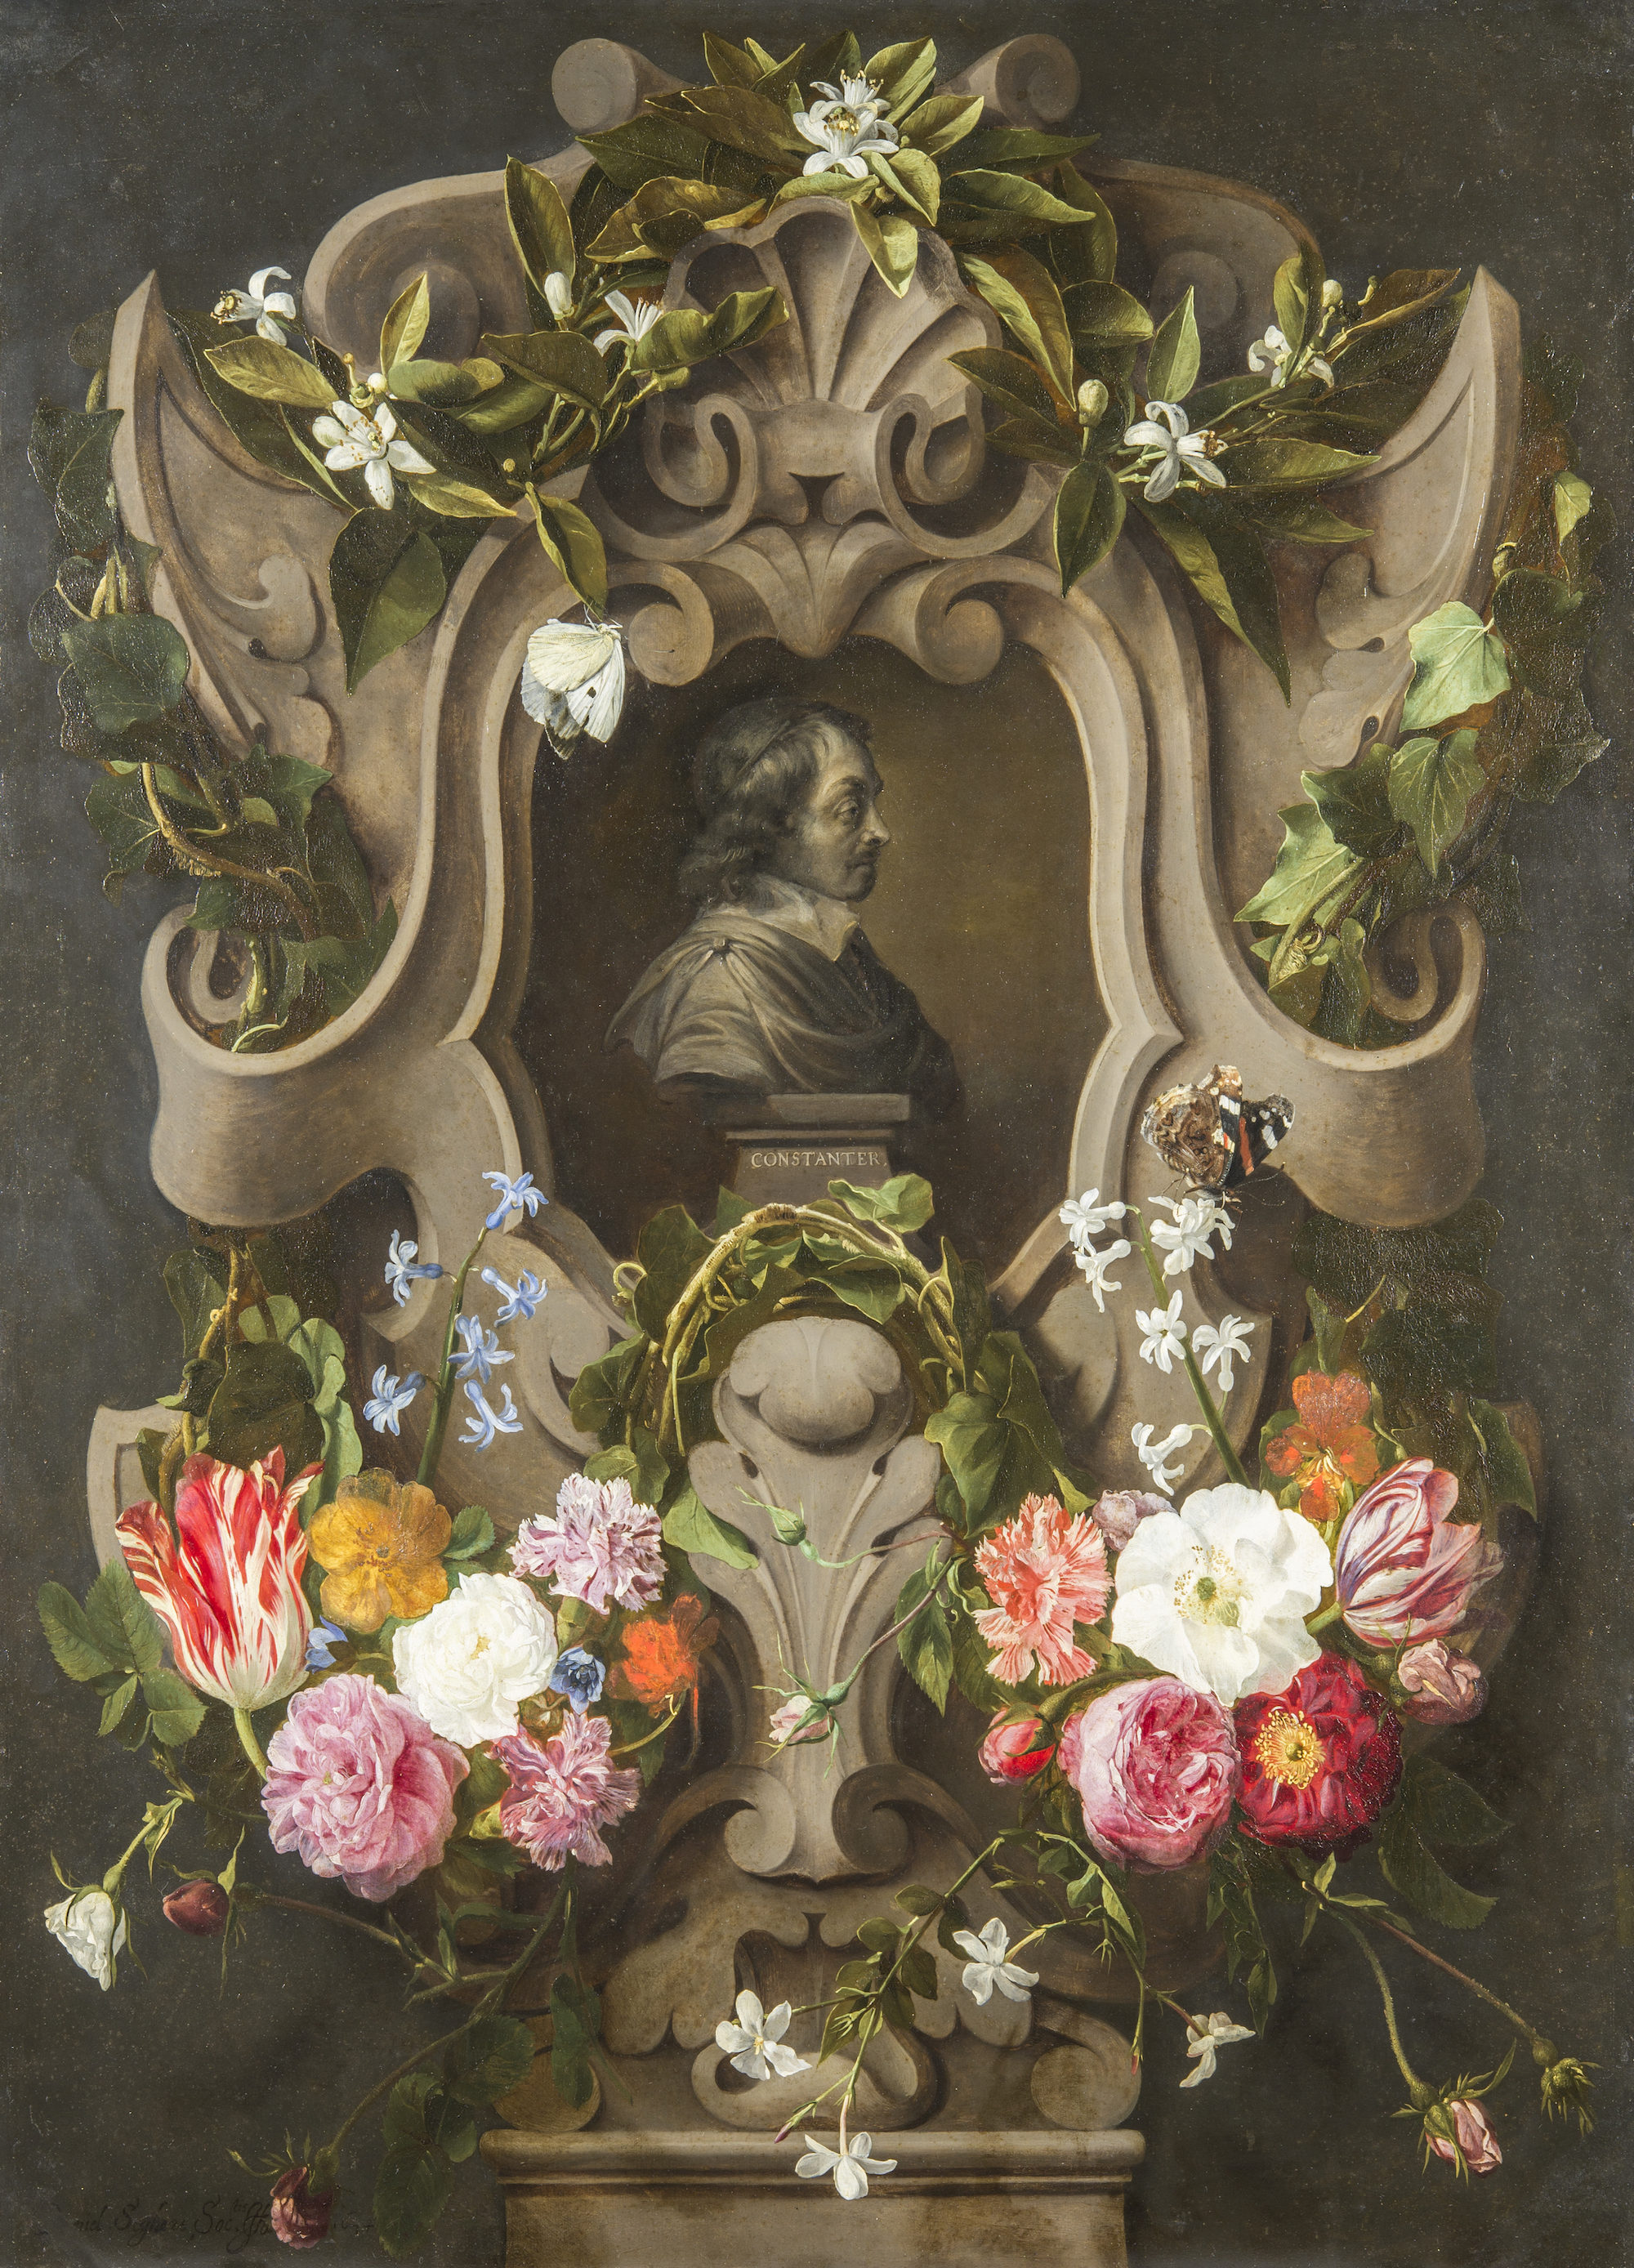 Bust of Constantijn Huygens by Daniel Seghers - 1644 Mauritshuis, The Hague